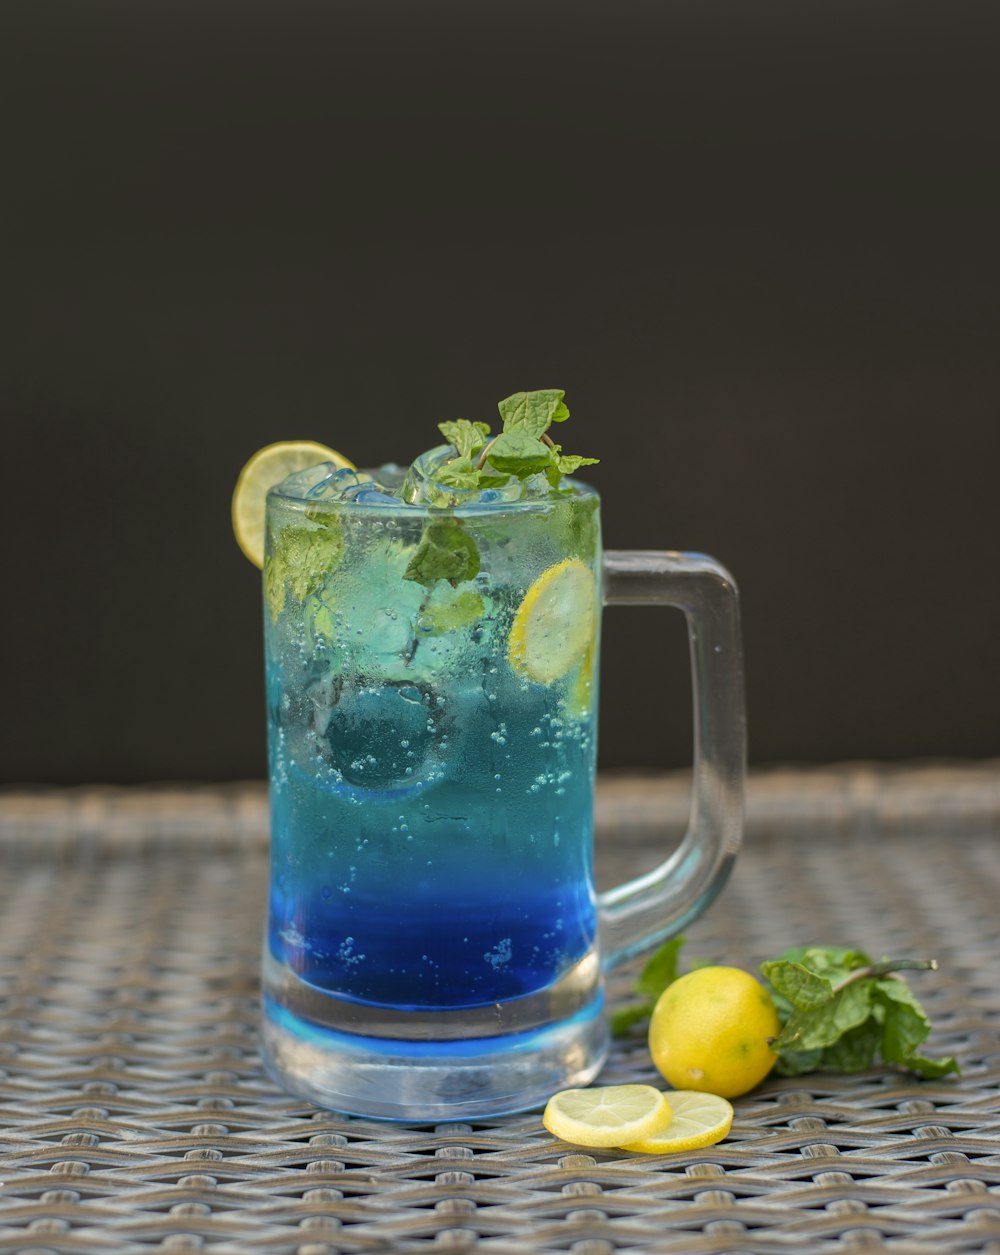 Taza de vidrio transparente con líquido azul